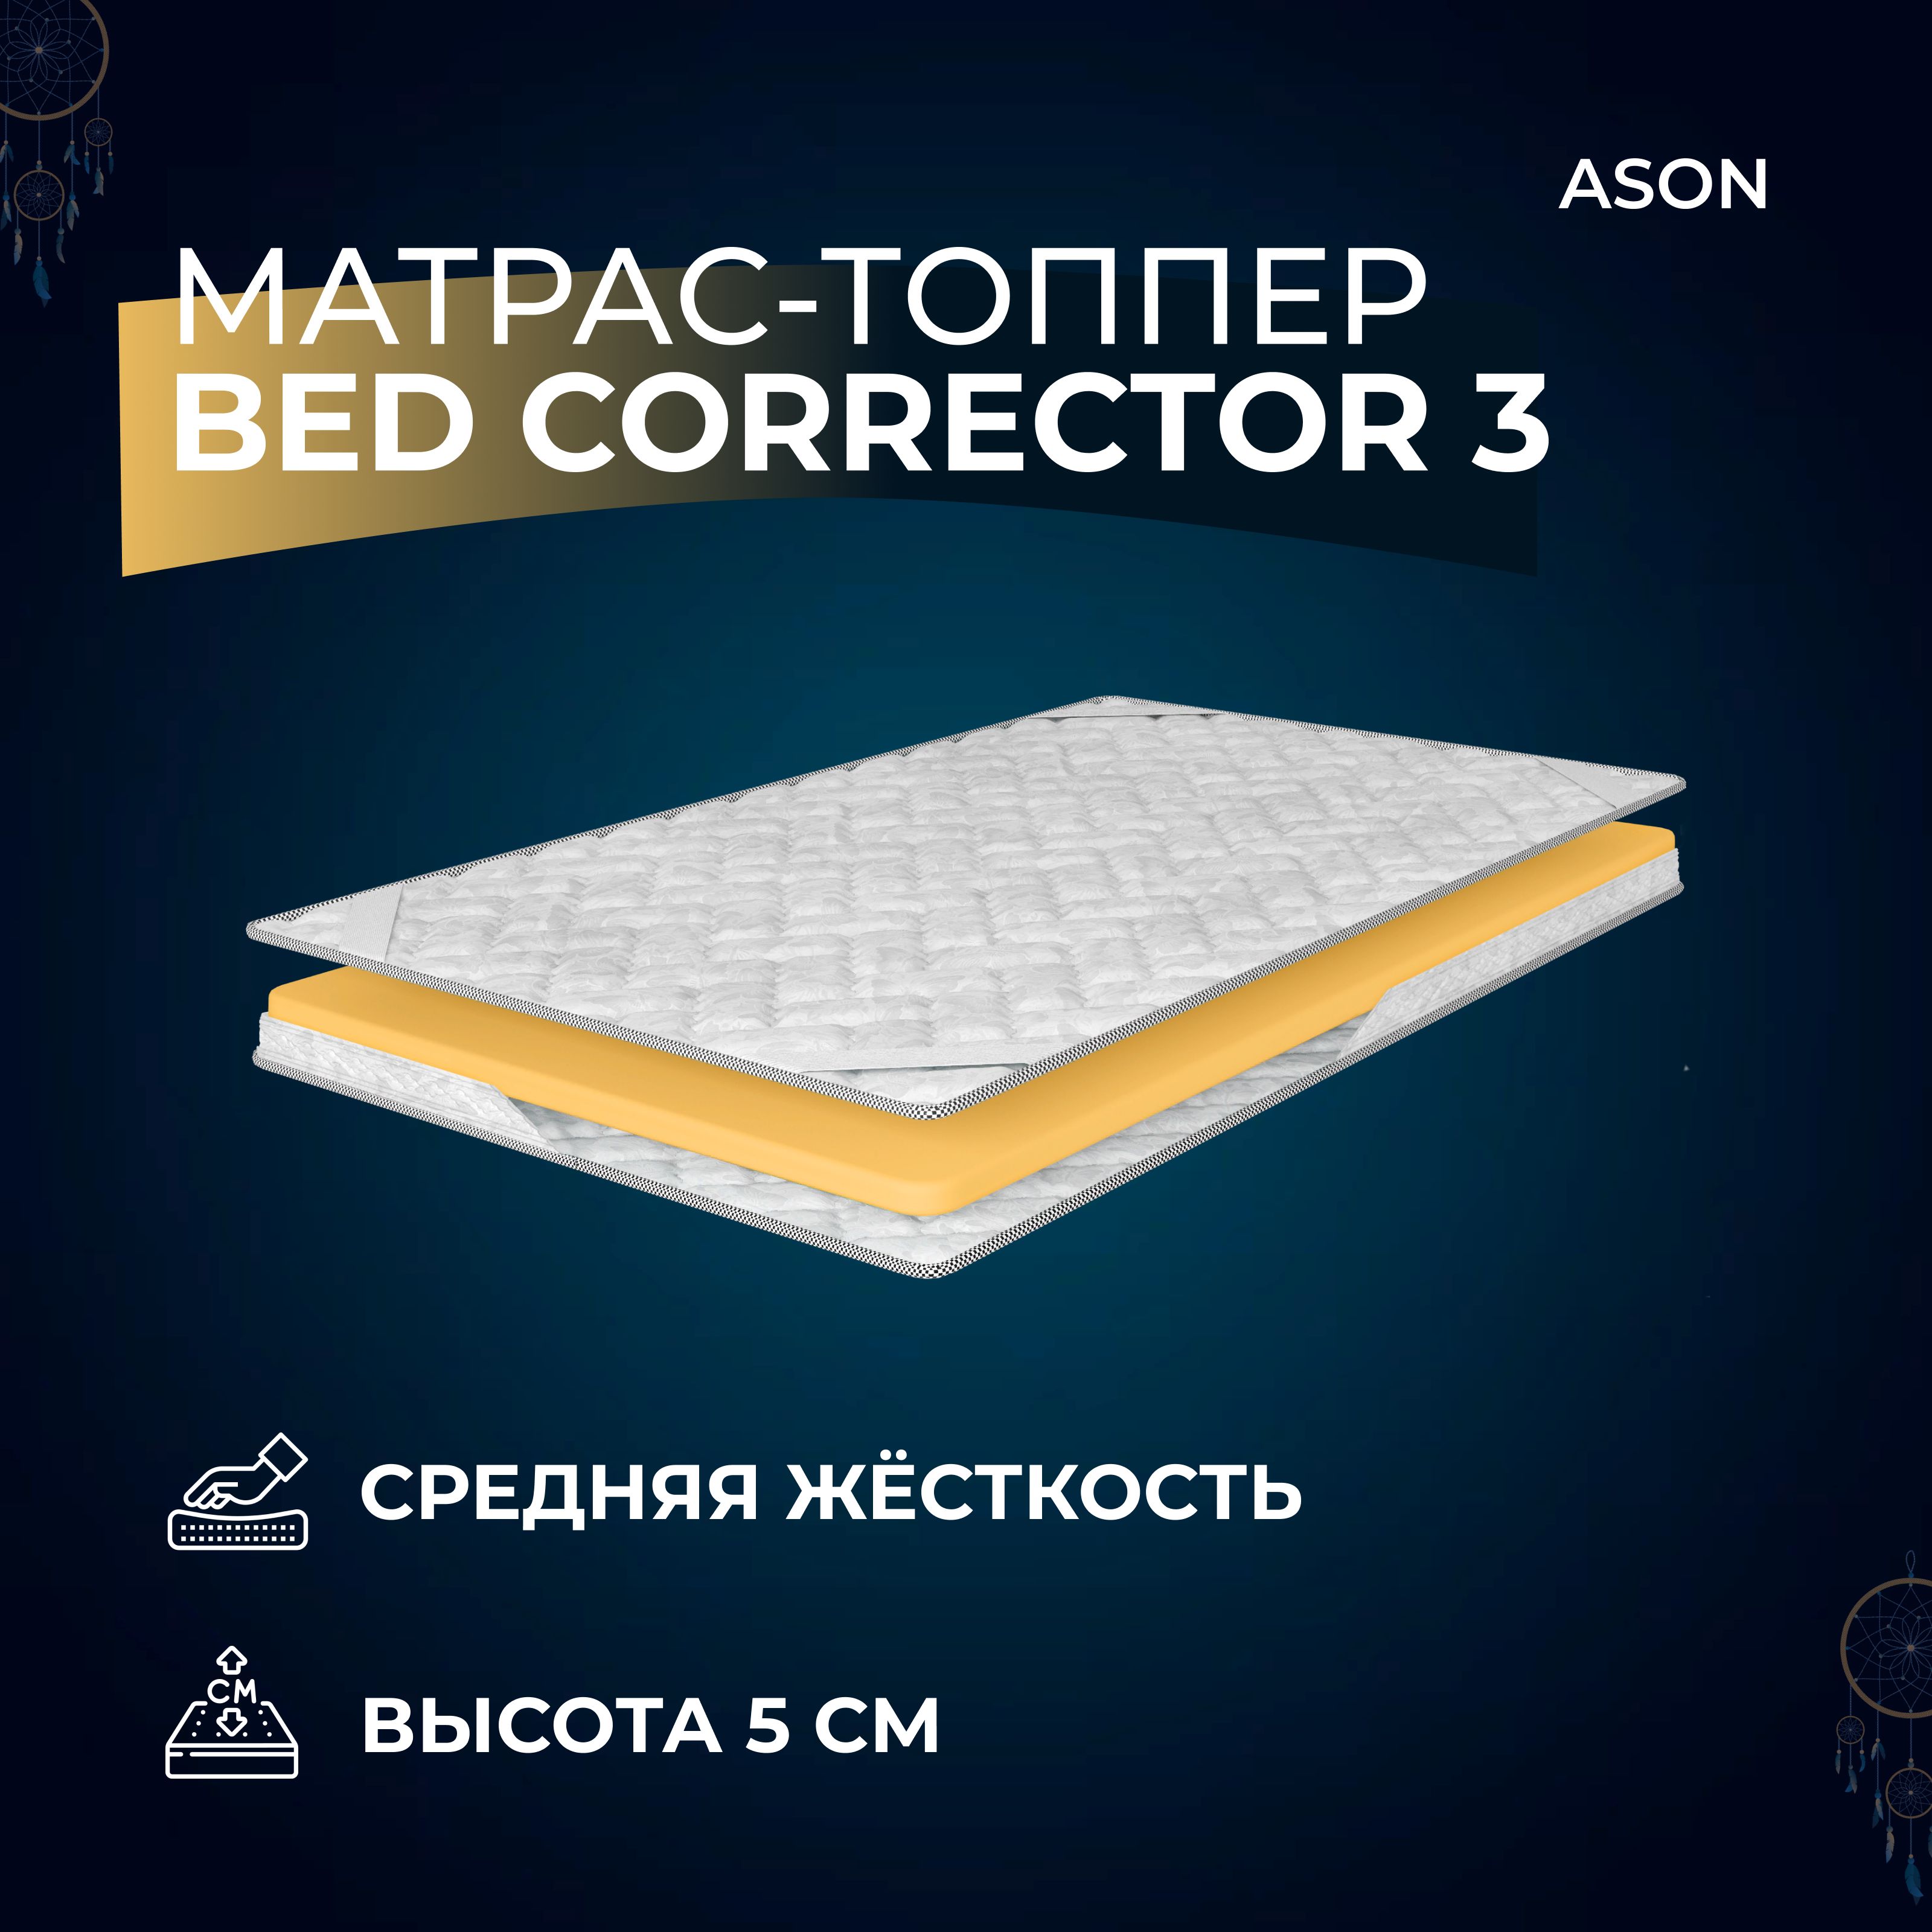 Матрас-топпер 130х200 Ason, Bed corrector 3